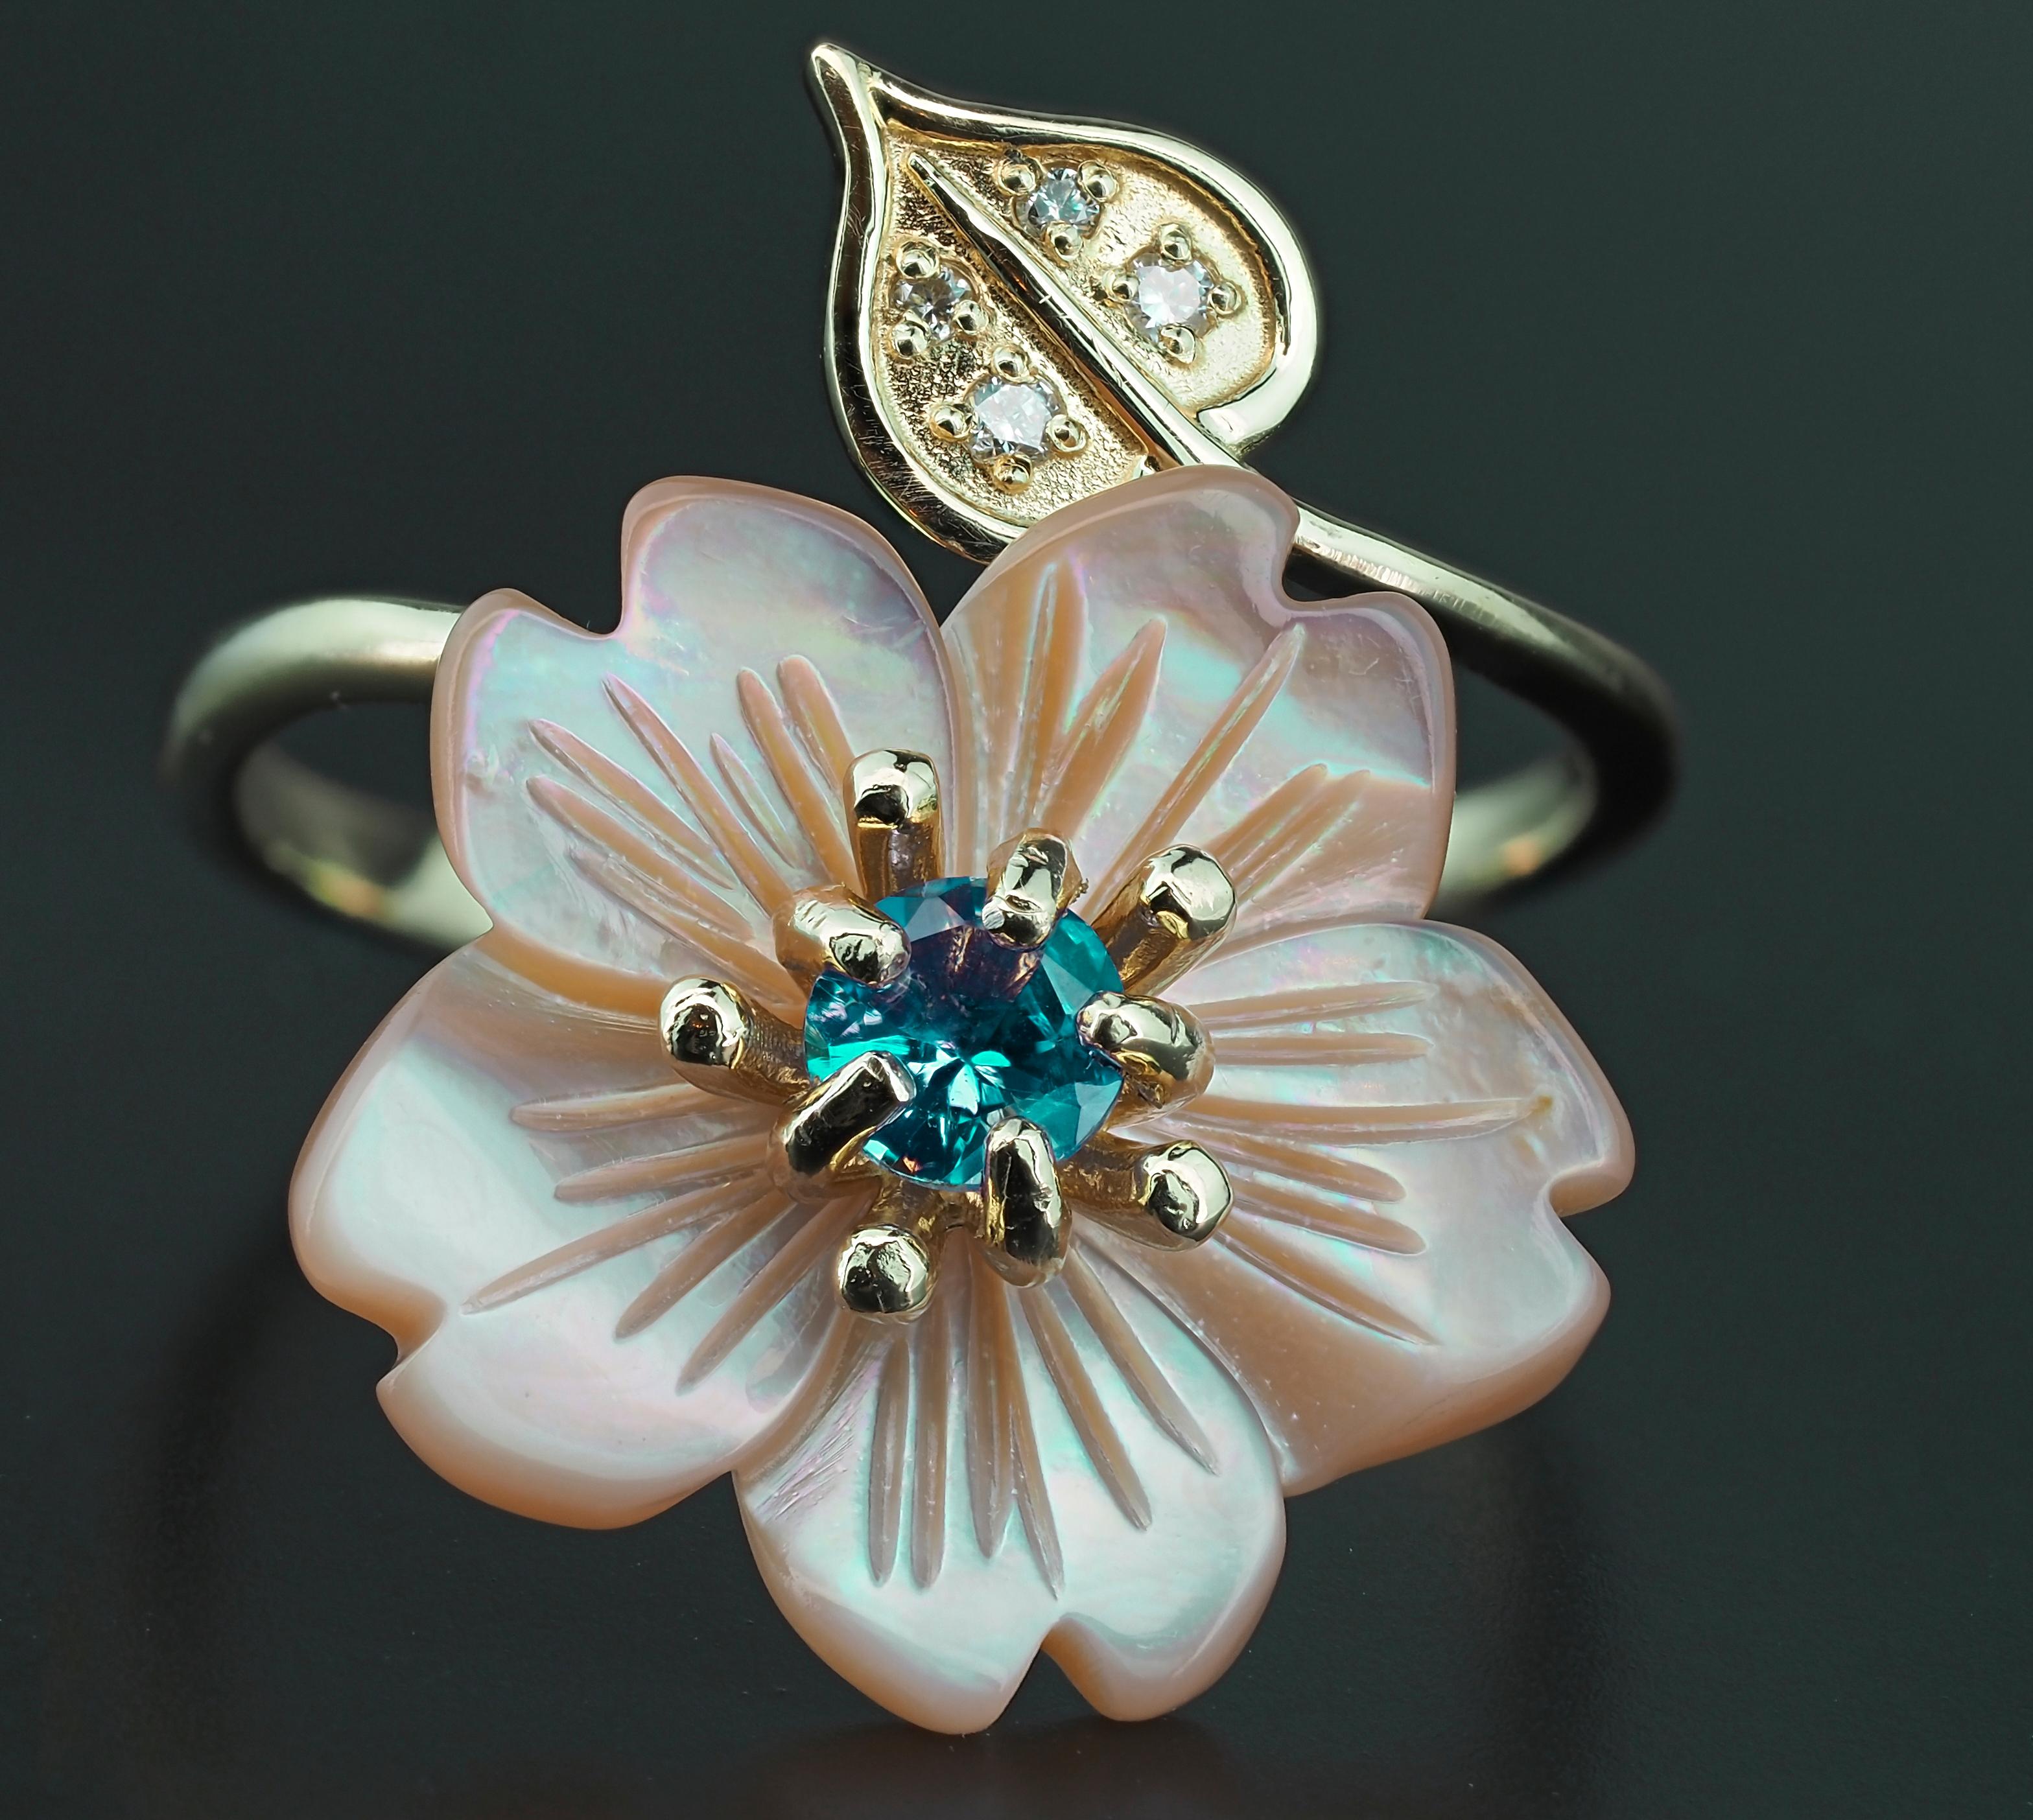 For Sale:  Carved Flower 14k ring with gemstones.  3